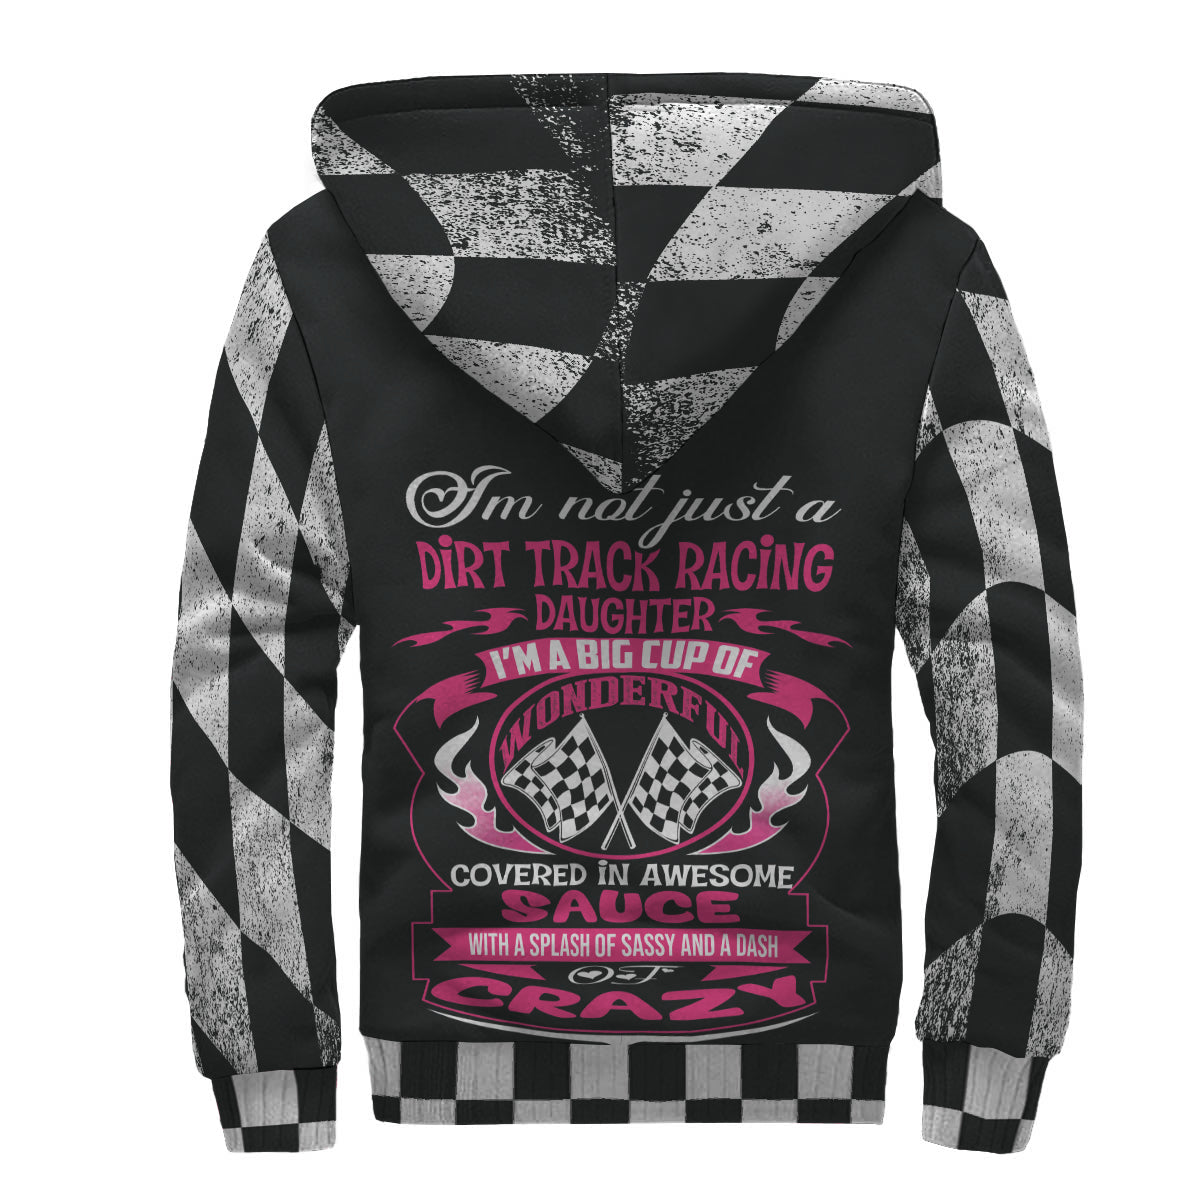 dirt track racing daughter jacket